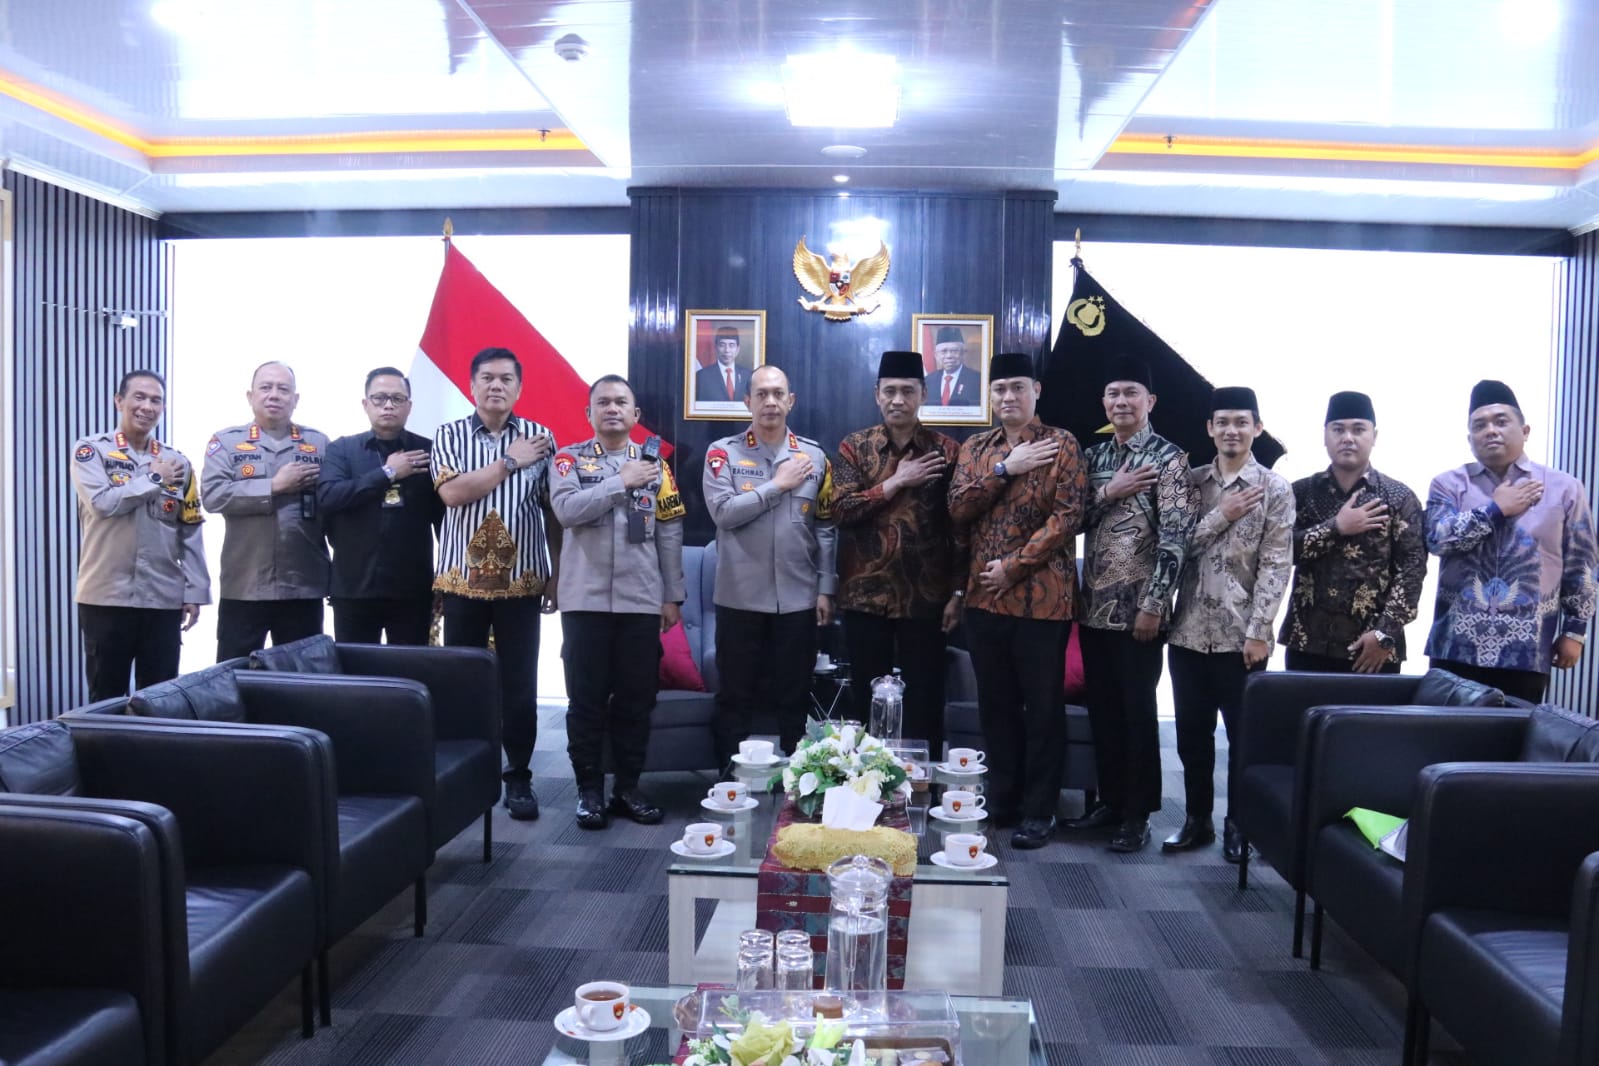 Pengurus DPW Lembaga Dakwah Islam Indonesia Sumsel Sampaikan 8 Program Bidang ke Kapolda